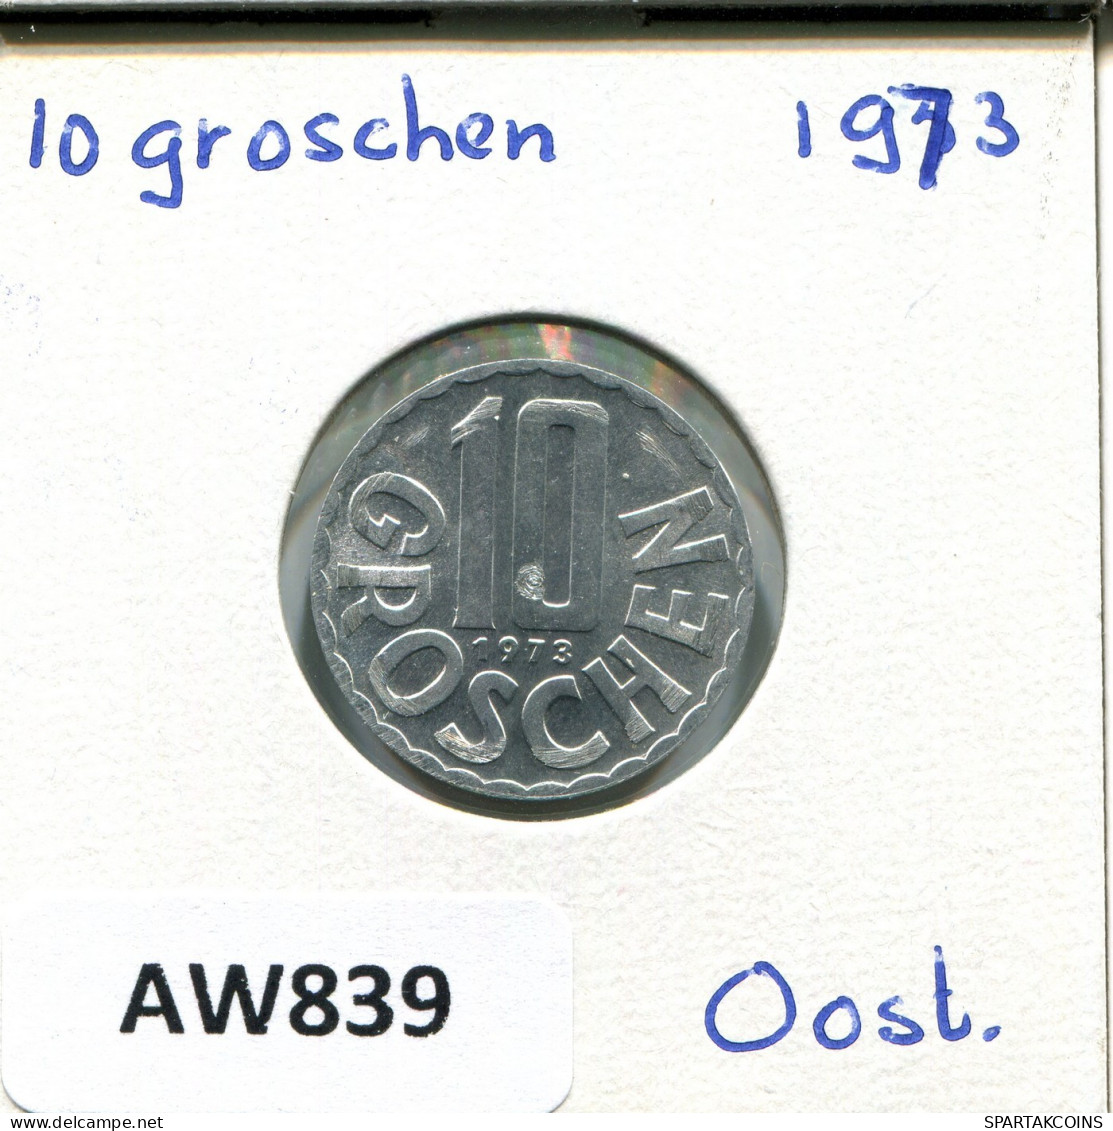 10 GROSCHEN 1973 AUSTRIA Coin #AW839.U.A - Oostenrijk